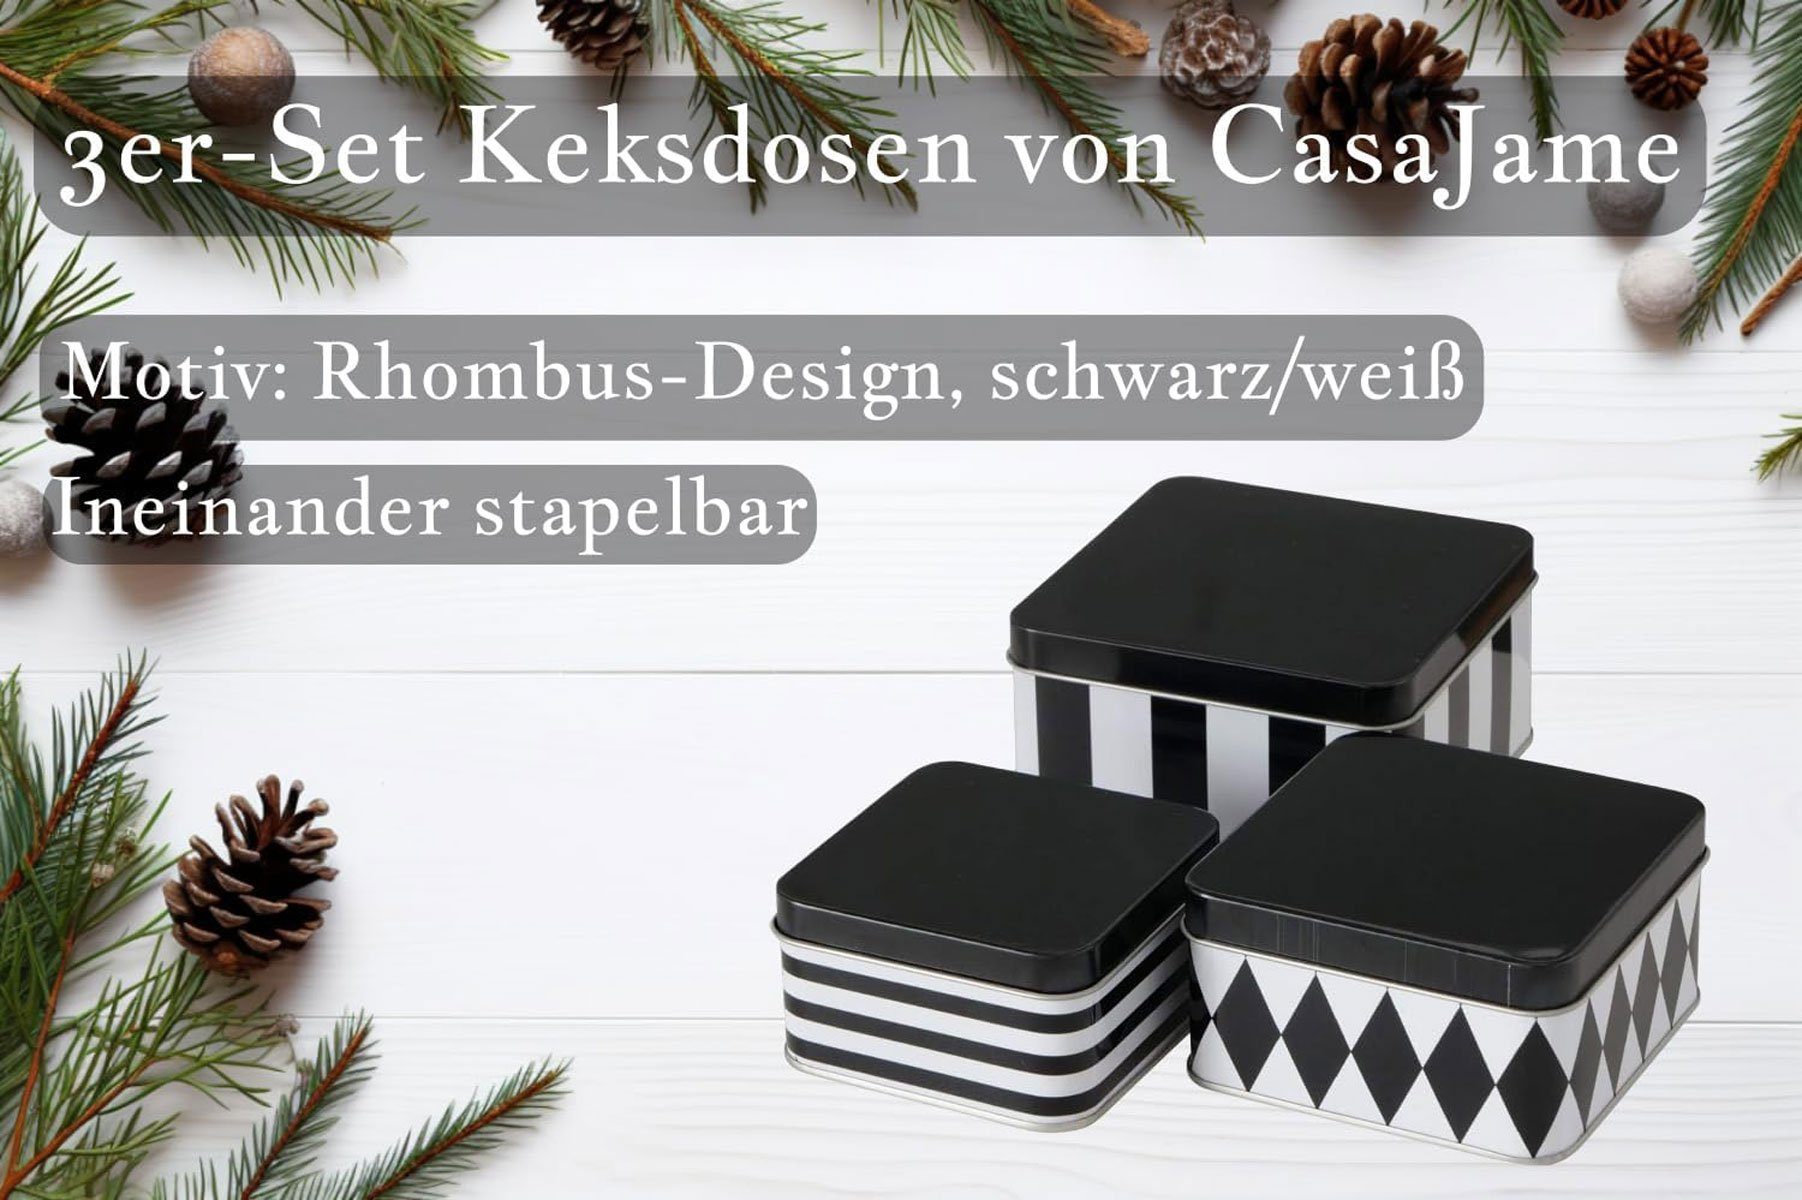 BOLTZE GRUPPE GmbH Keksdose Rhombus-Design Metall 3er Set V13 Eckig, Schwarz-Weiß Keksdosen